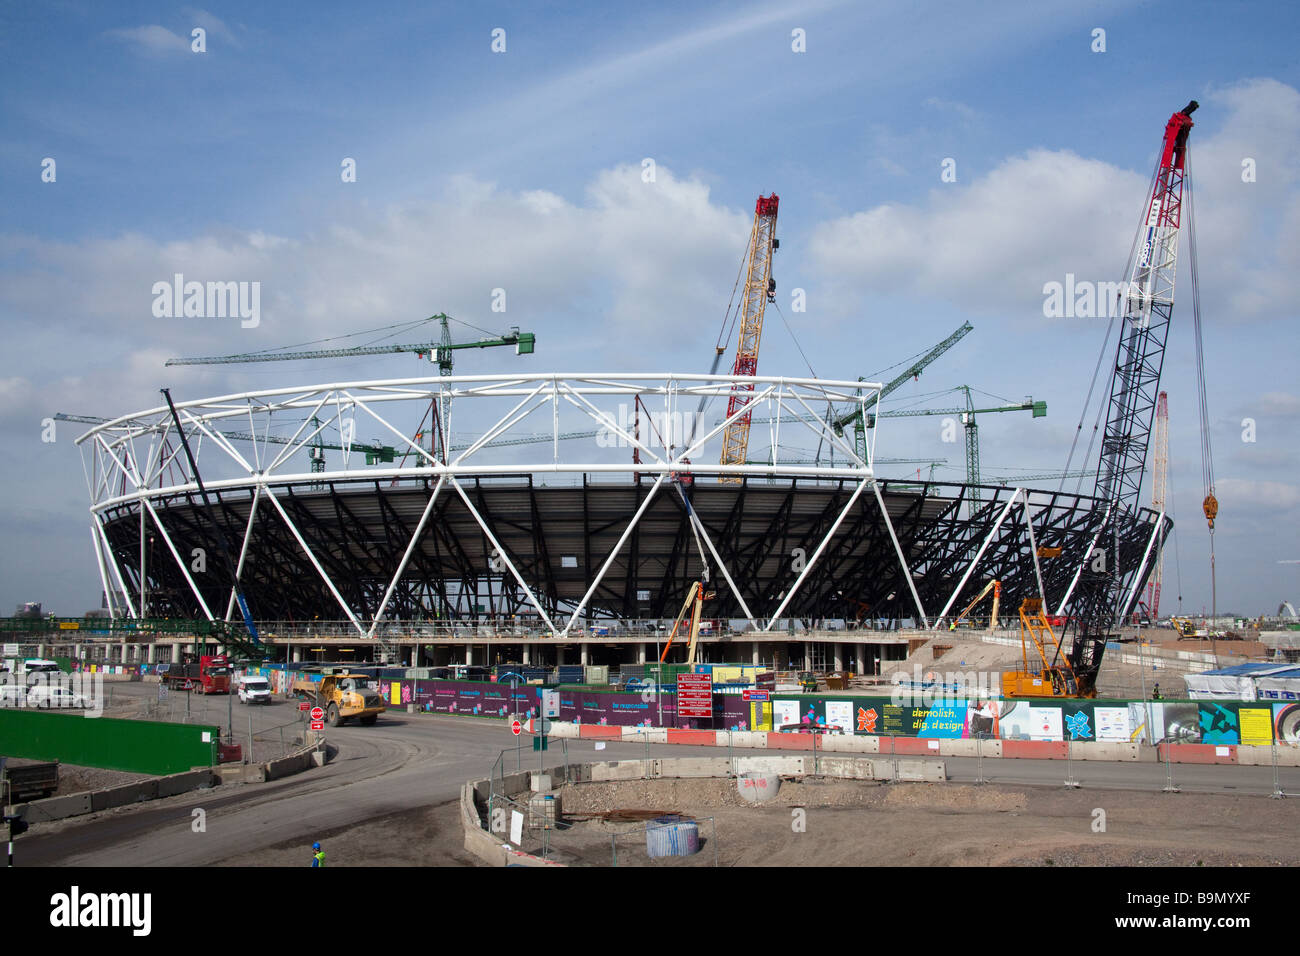 Le stade olympique de Londres 2012 en construction Mars 2009 Stratford Londres Angleterre Banque D'Images